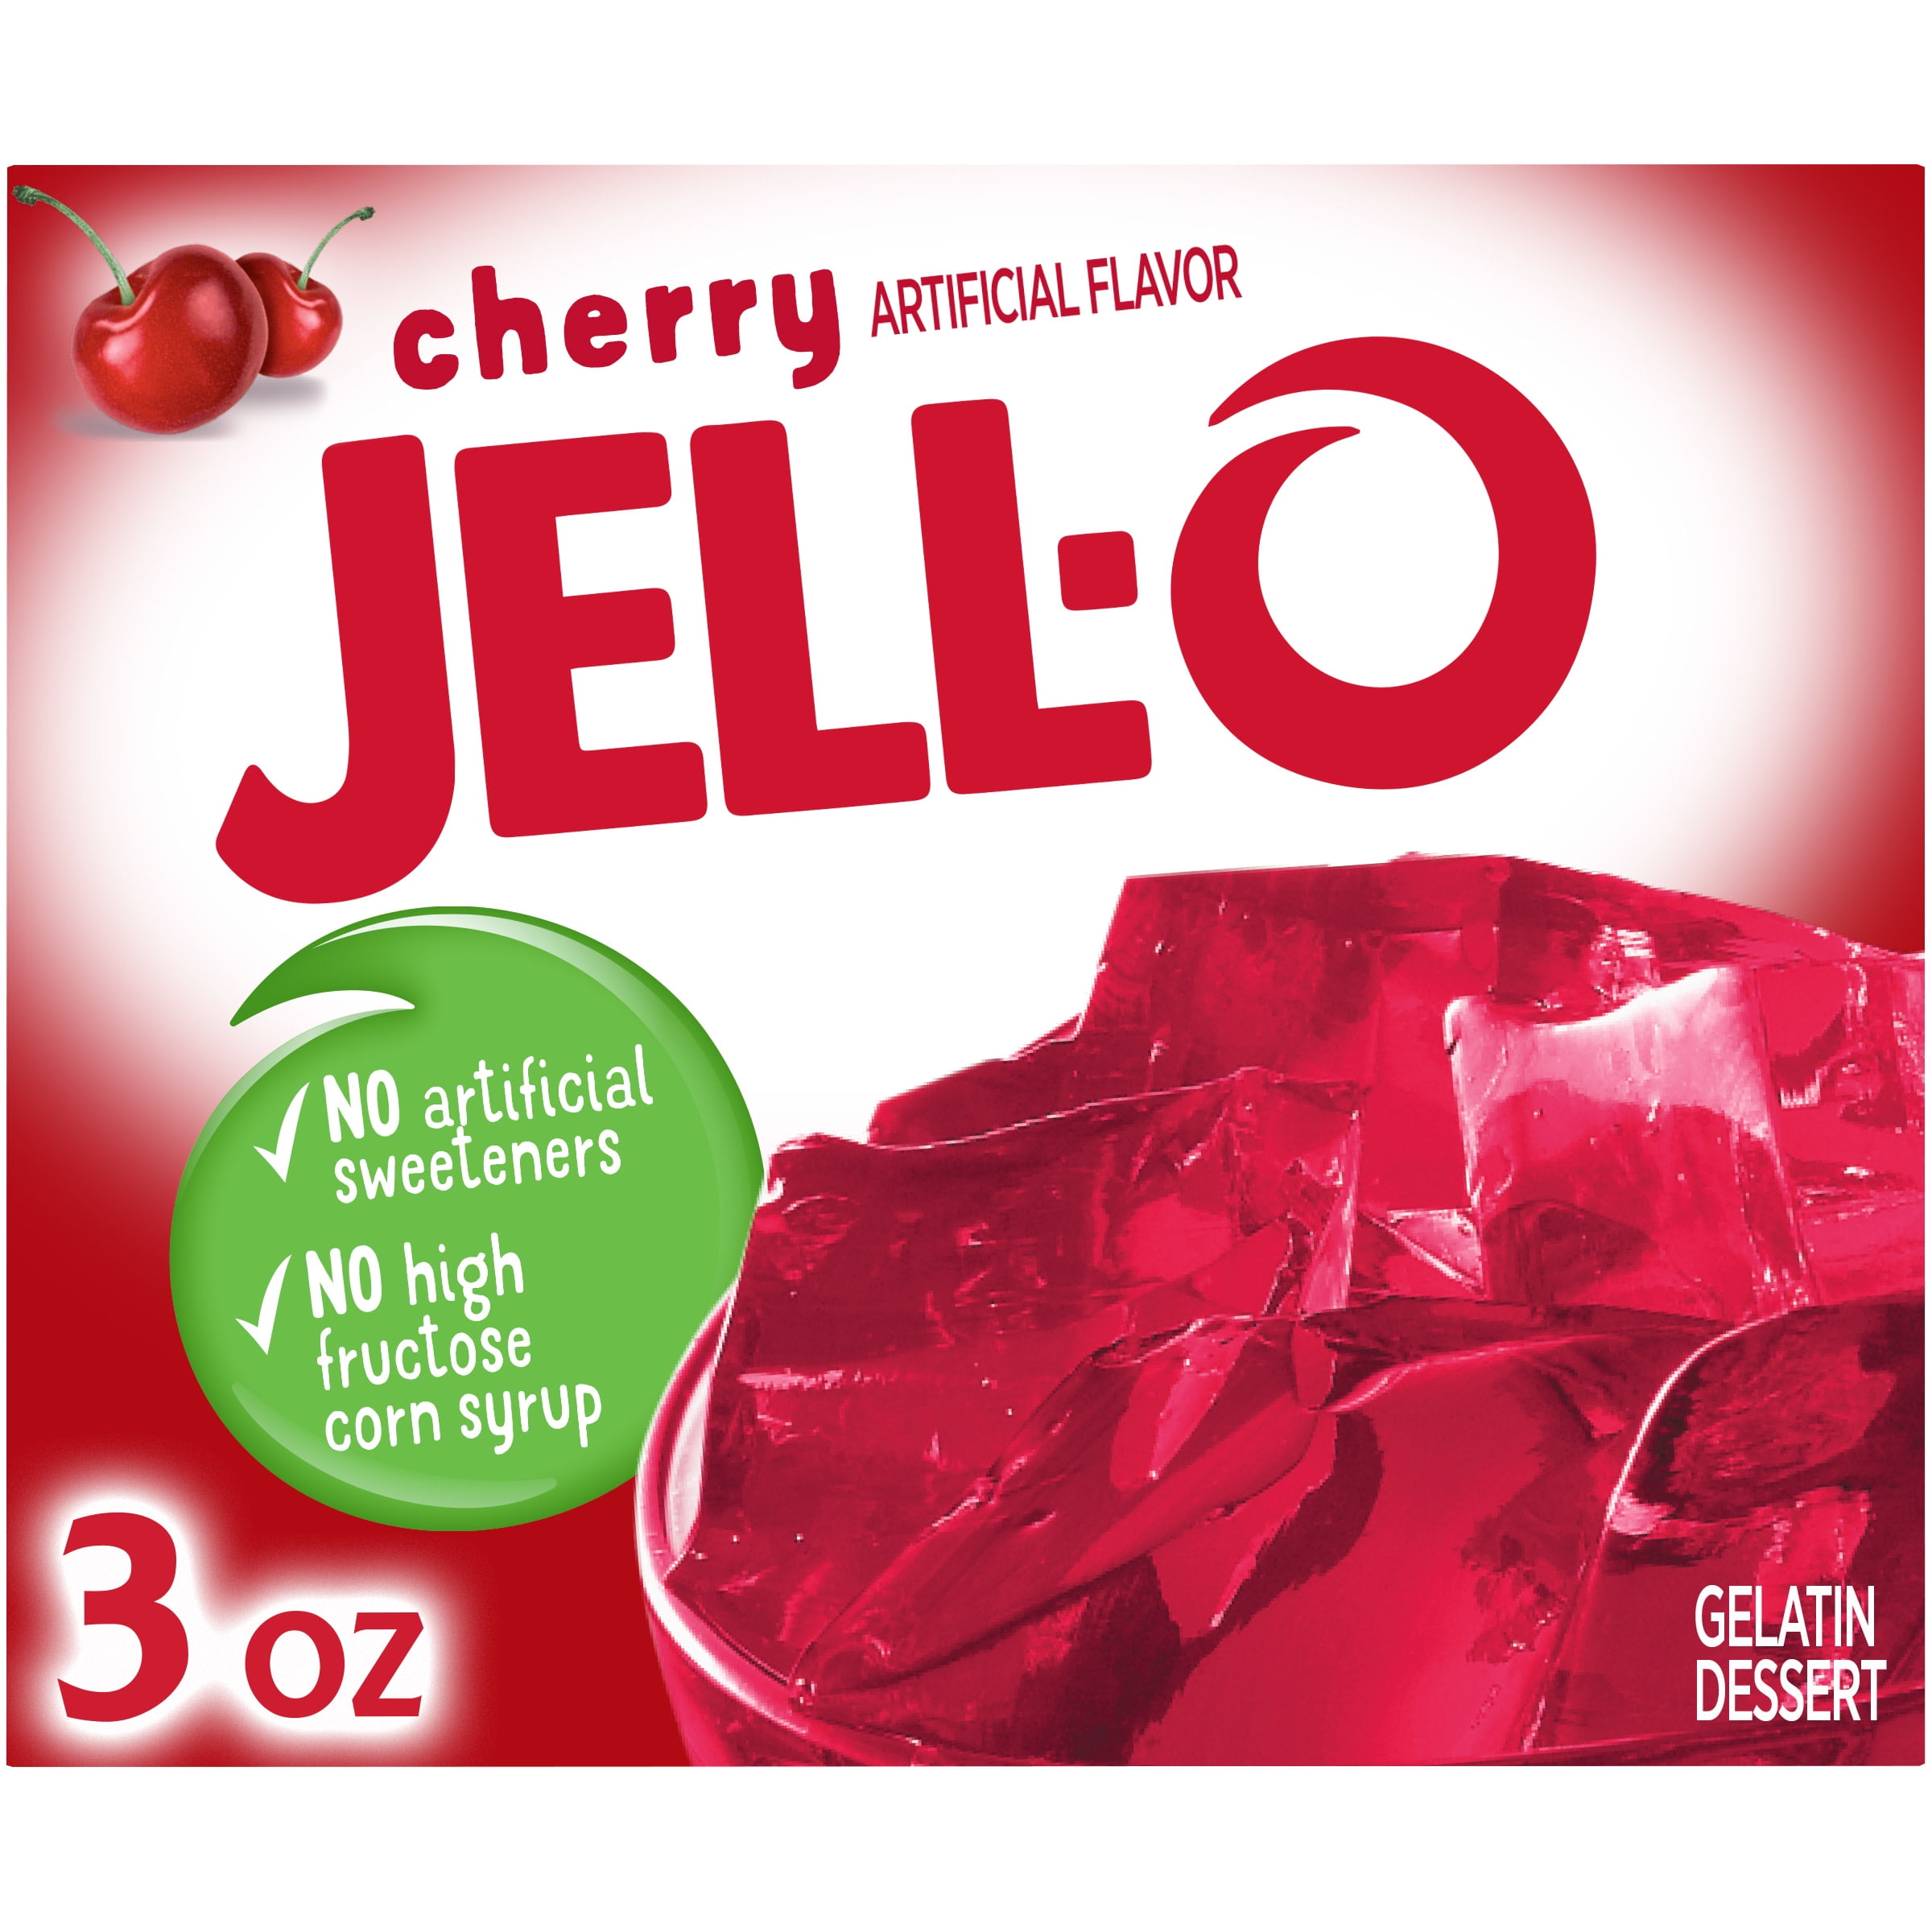 Jell-O Cherry Gelatin Dessert Mix, 3 oz Box